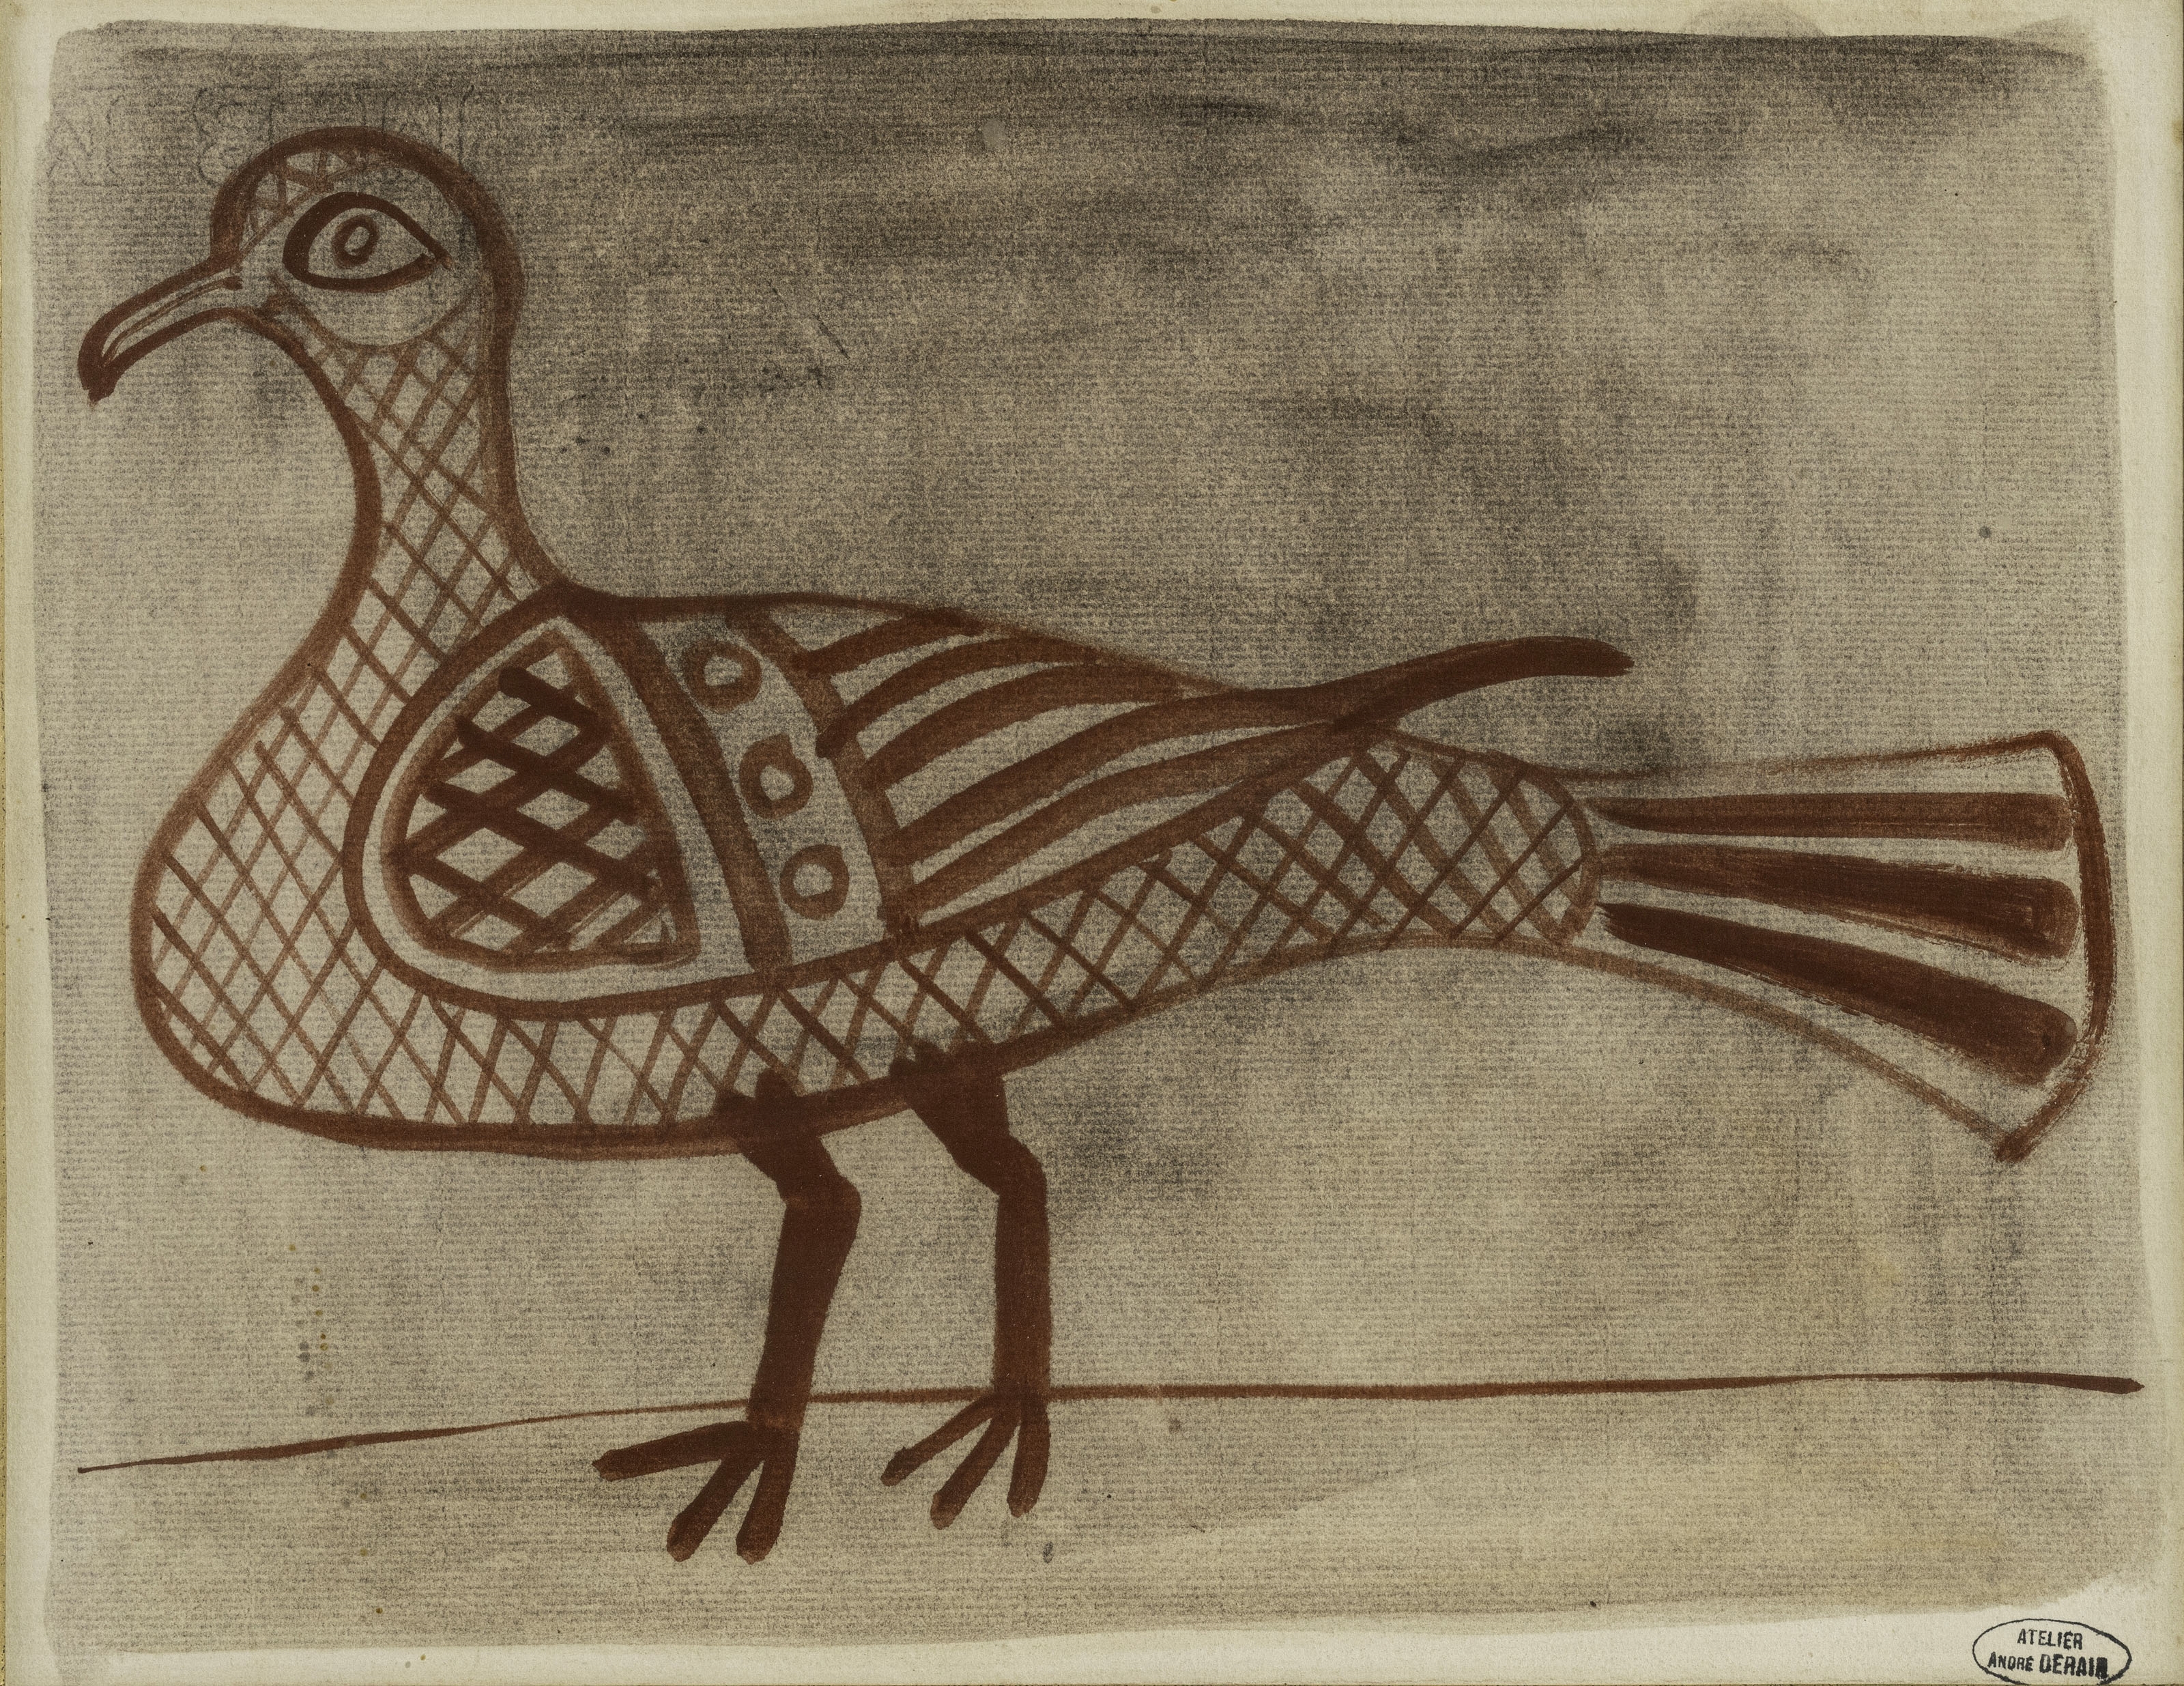 Oiseau by André Derain, circa 1950